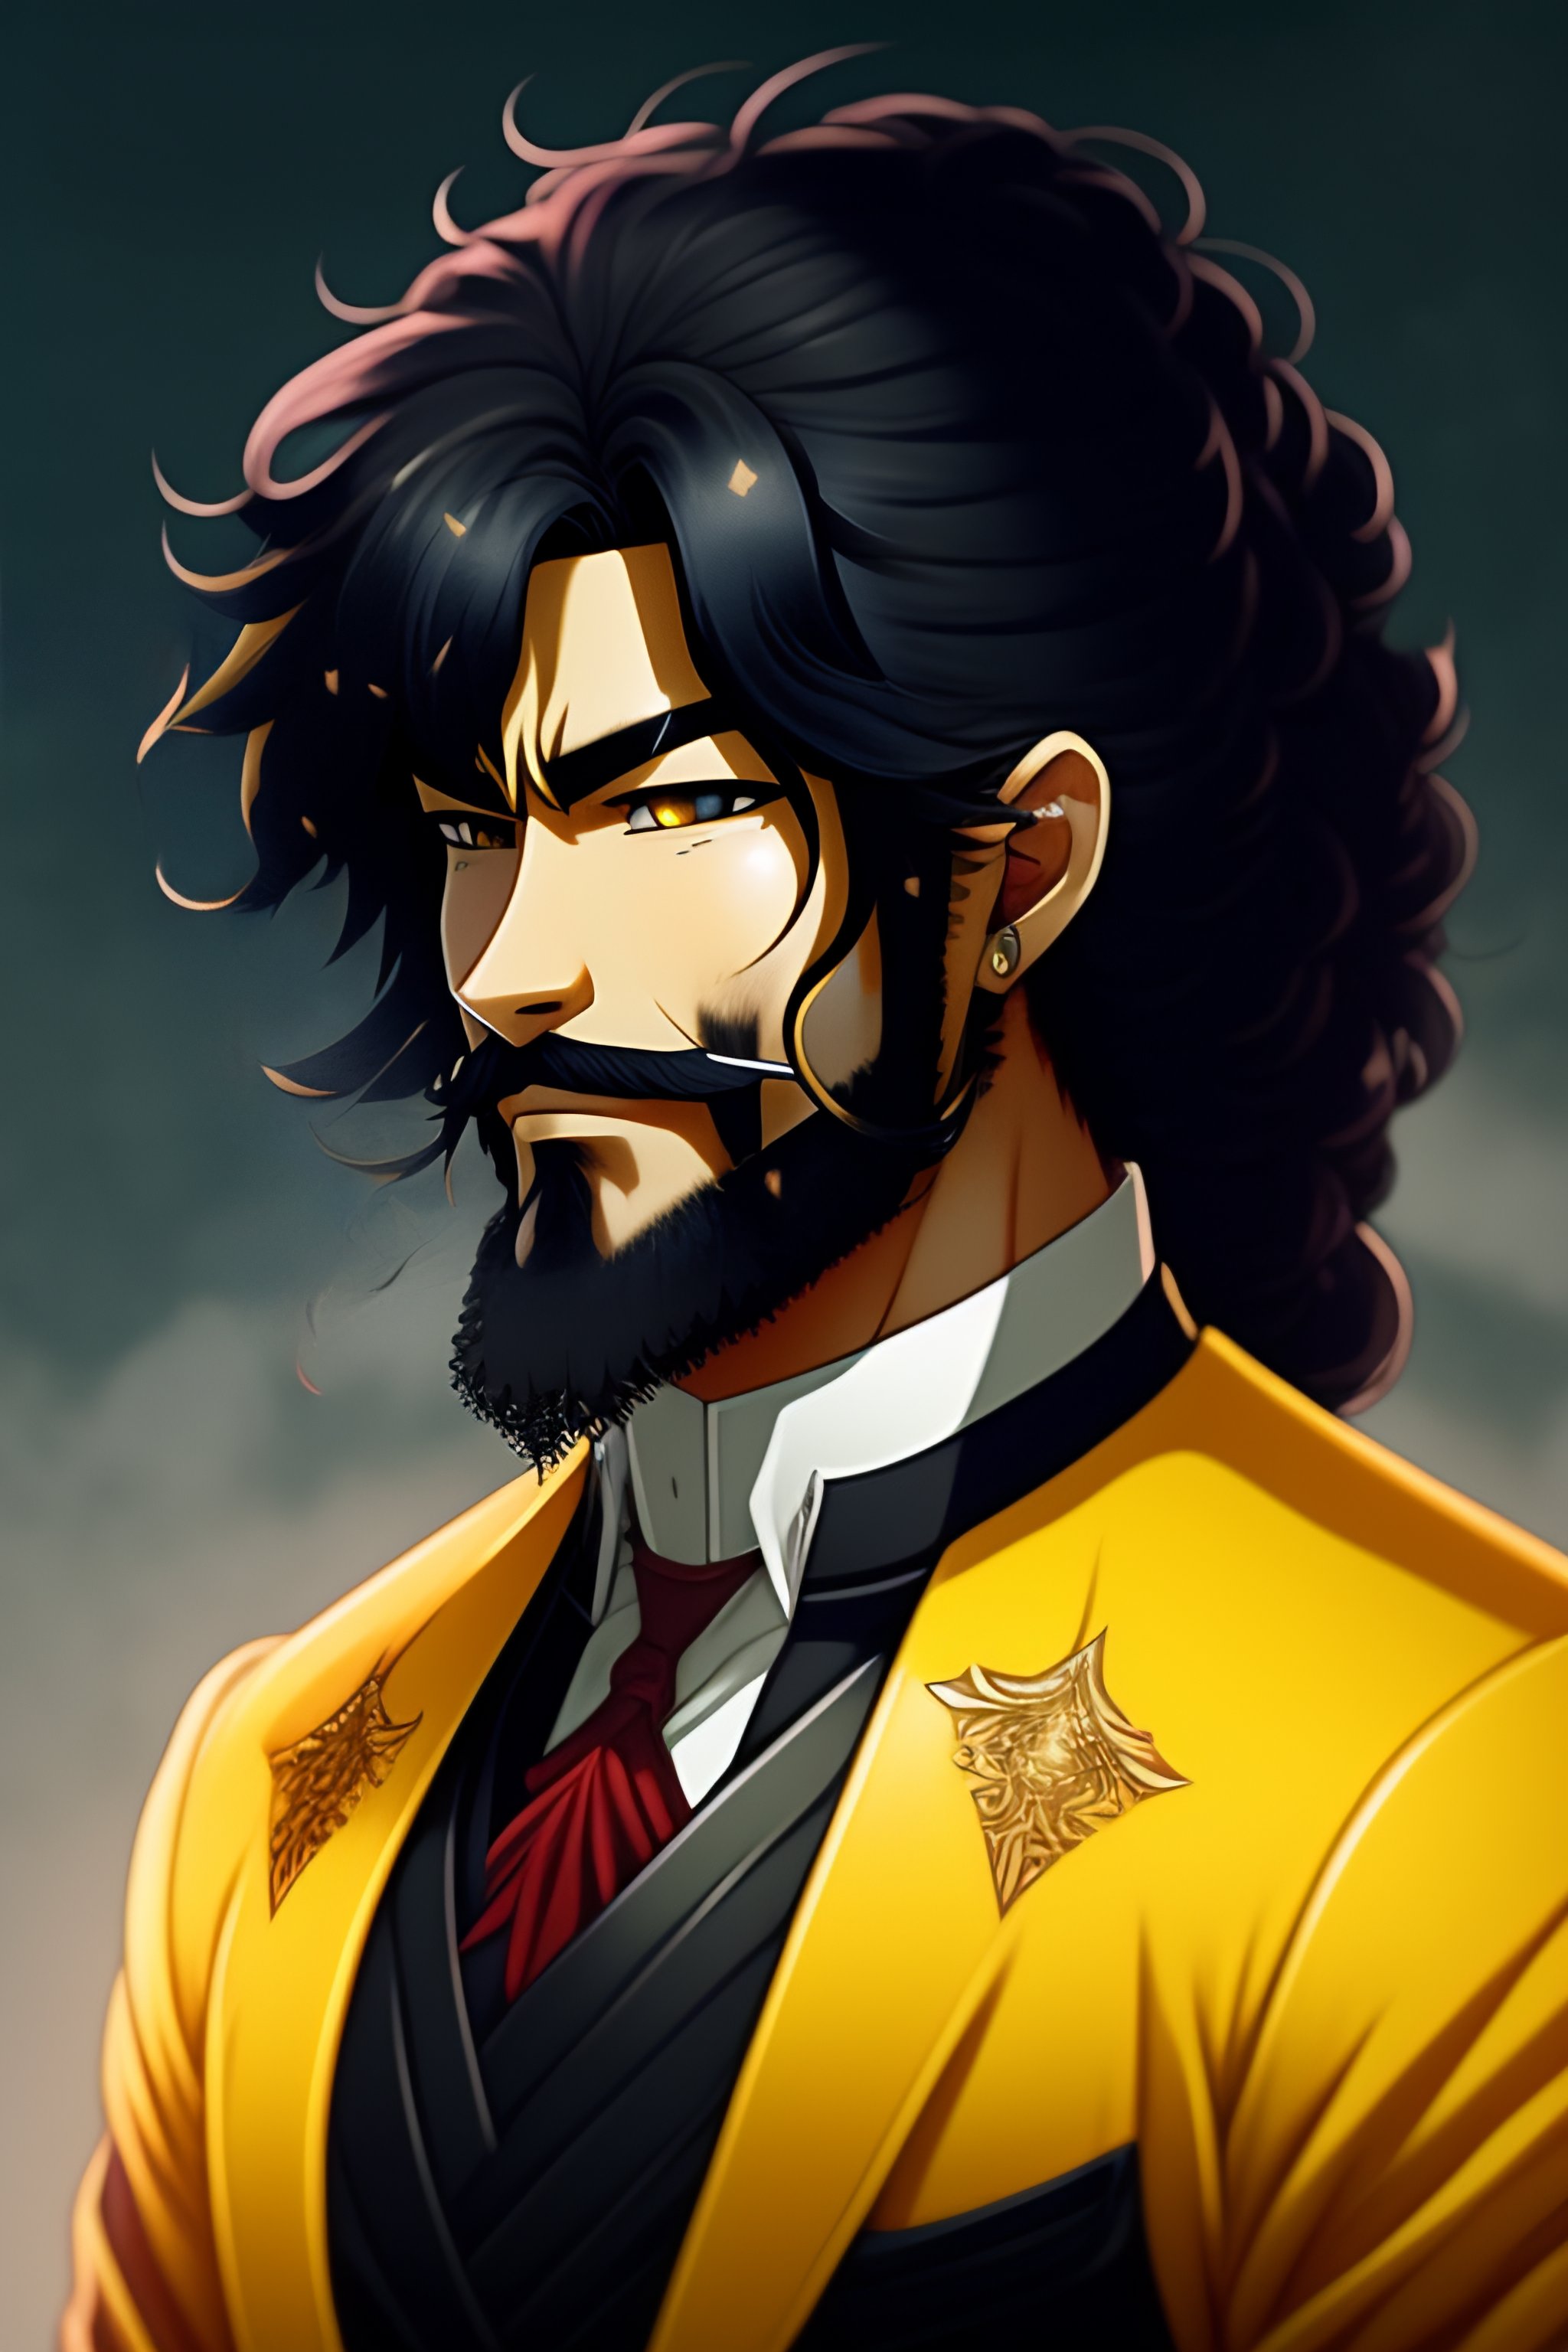 Lexica - Anime warrior king, 42 years old, black long hair, long